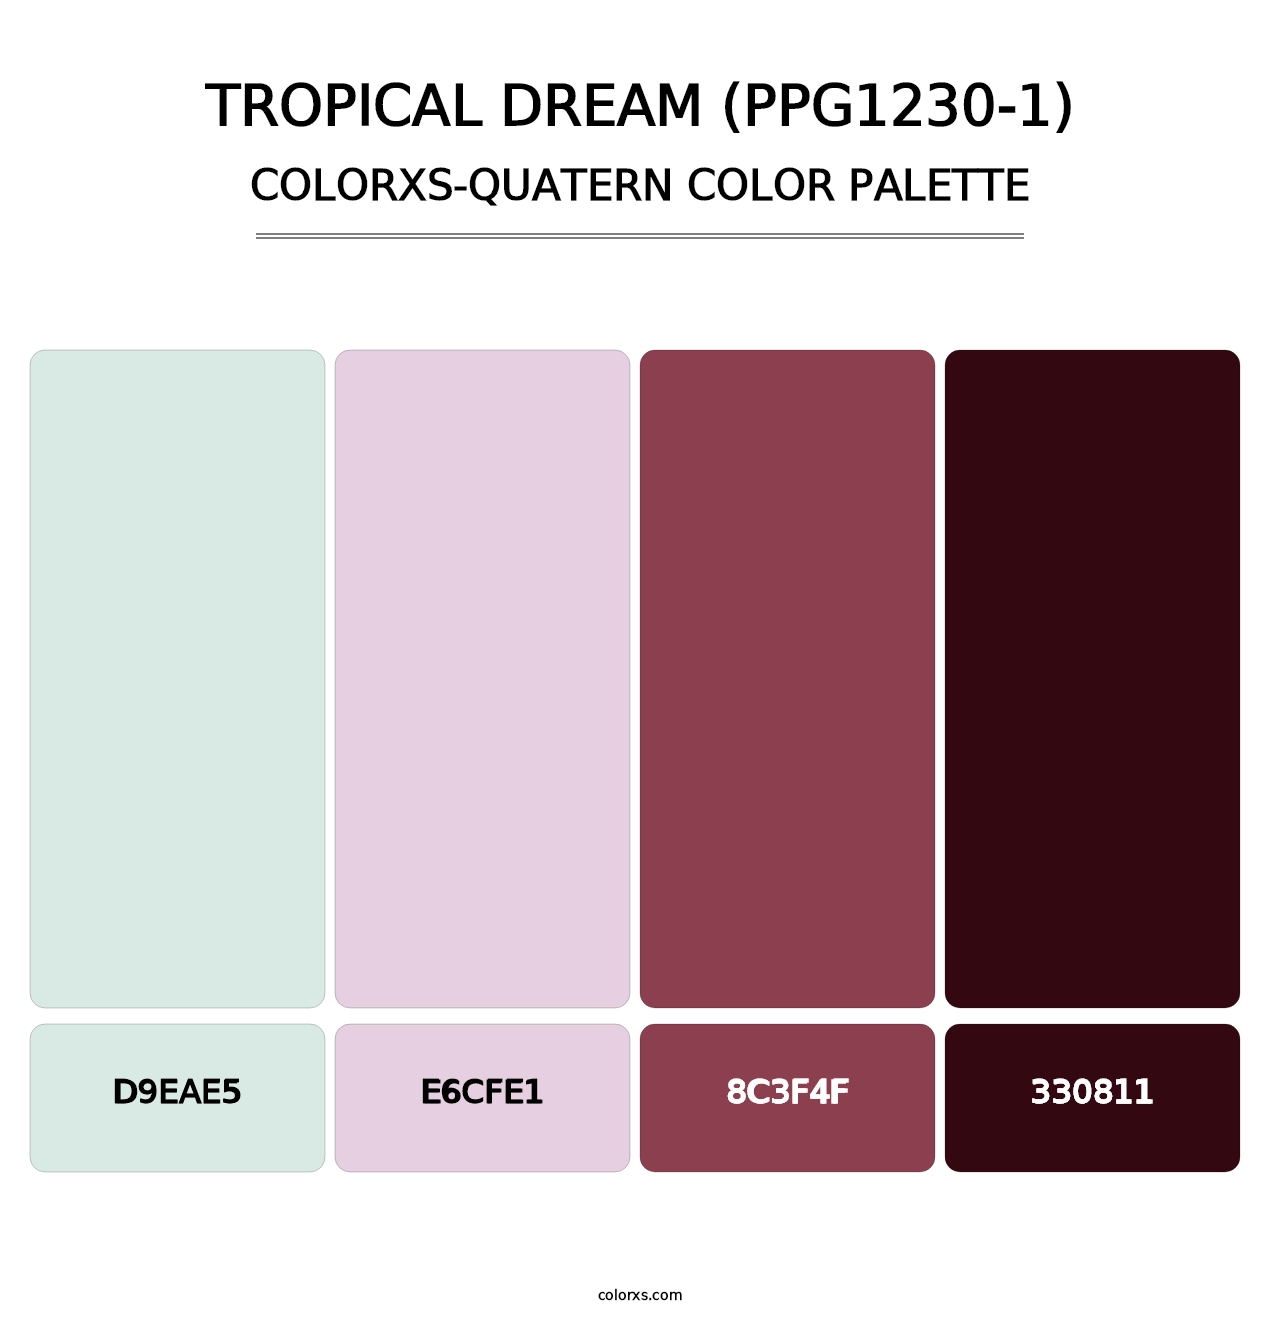 Tropical Dream (PPG1230-1) - Colorxs Quatern Palette